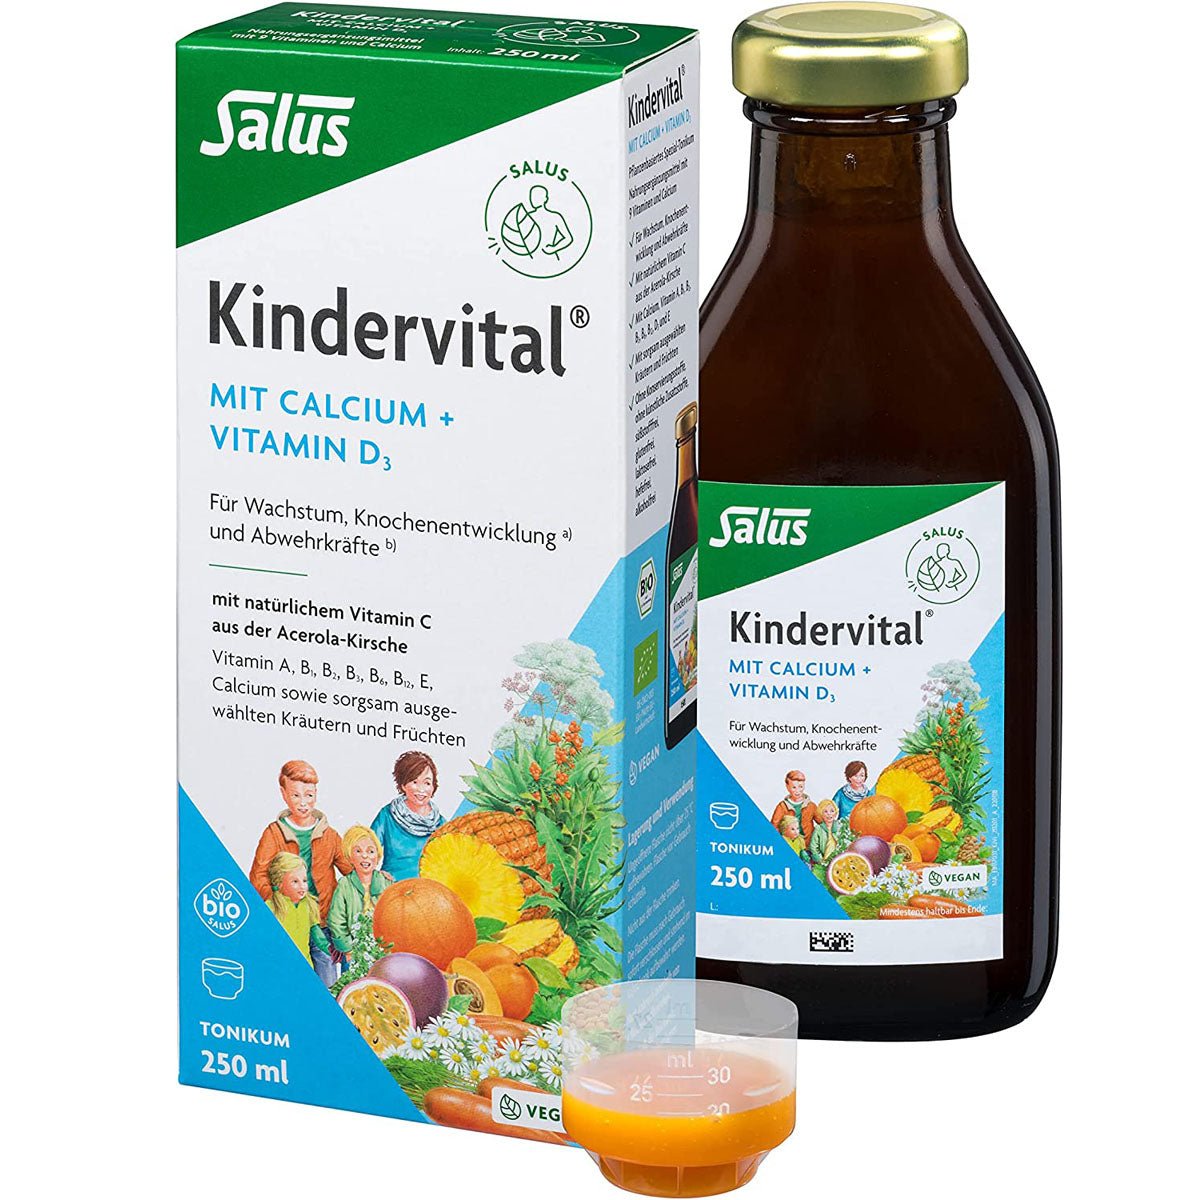 Salus Kindervital mit Calcium & Vitamin D3 - 250 ml - Beauty Center Europe